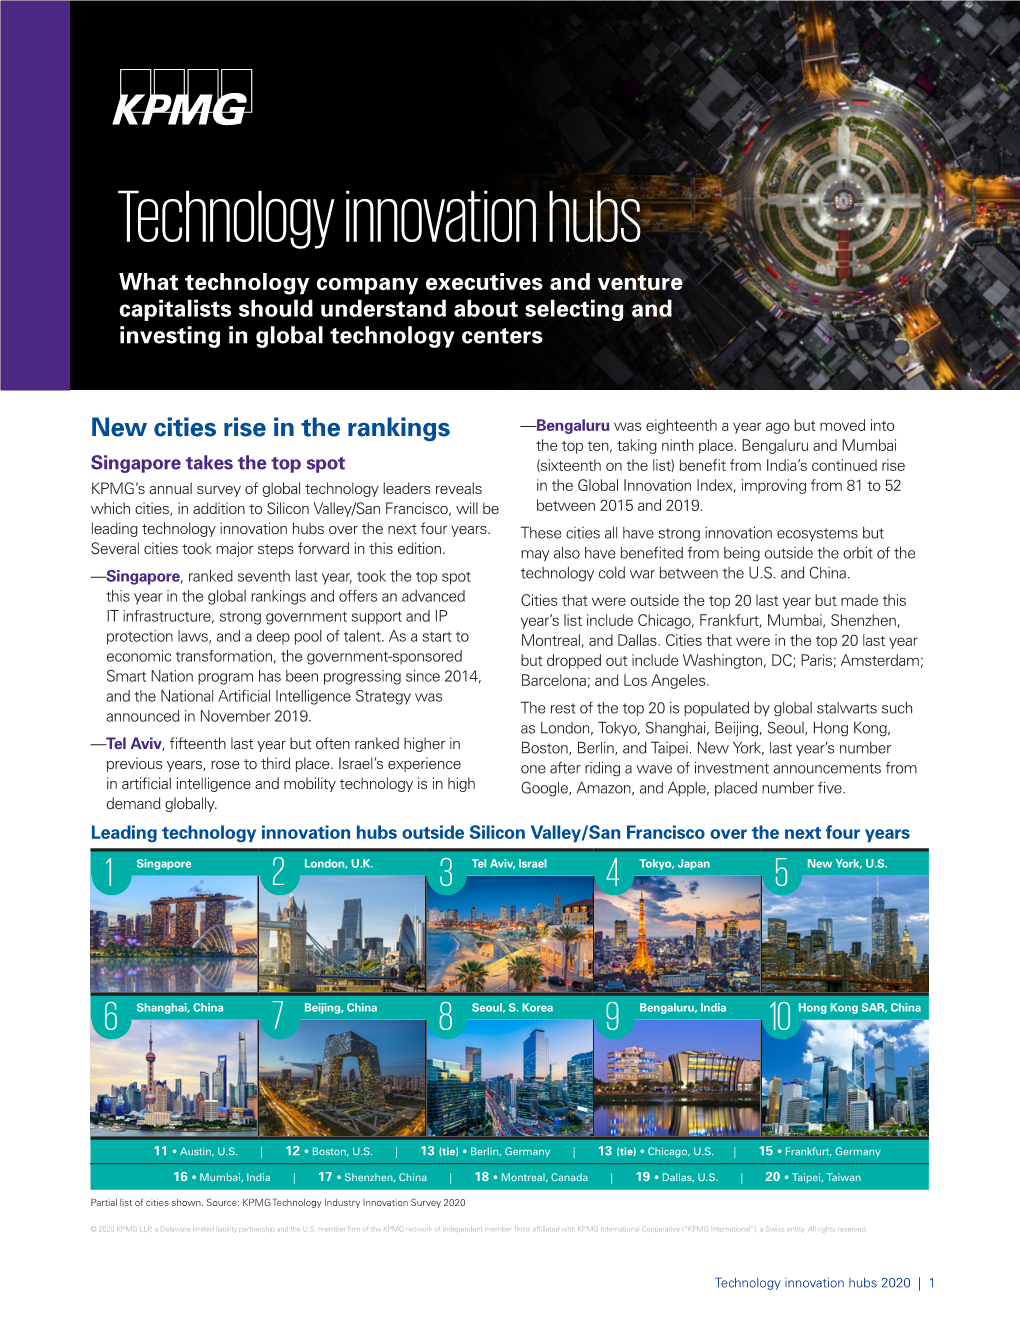 Technology Innovation Hubs